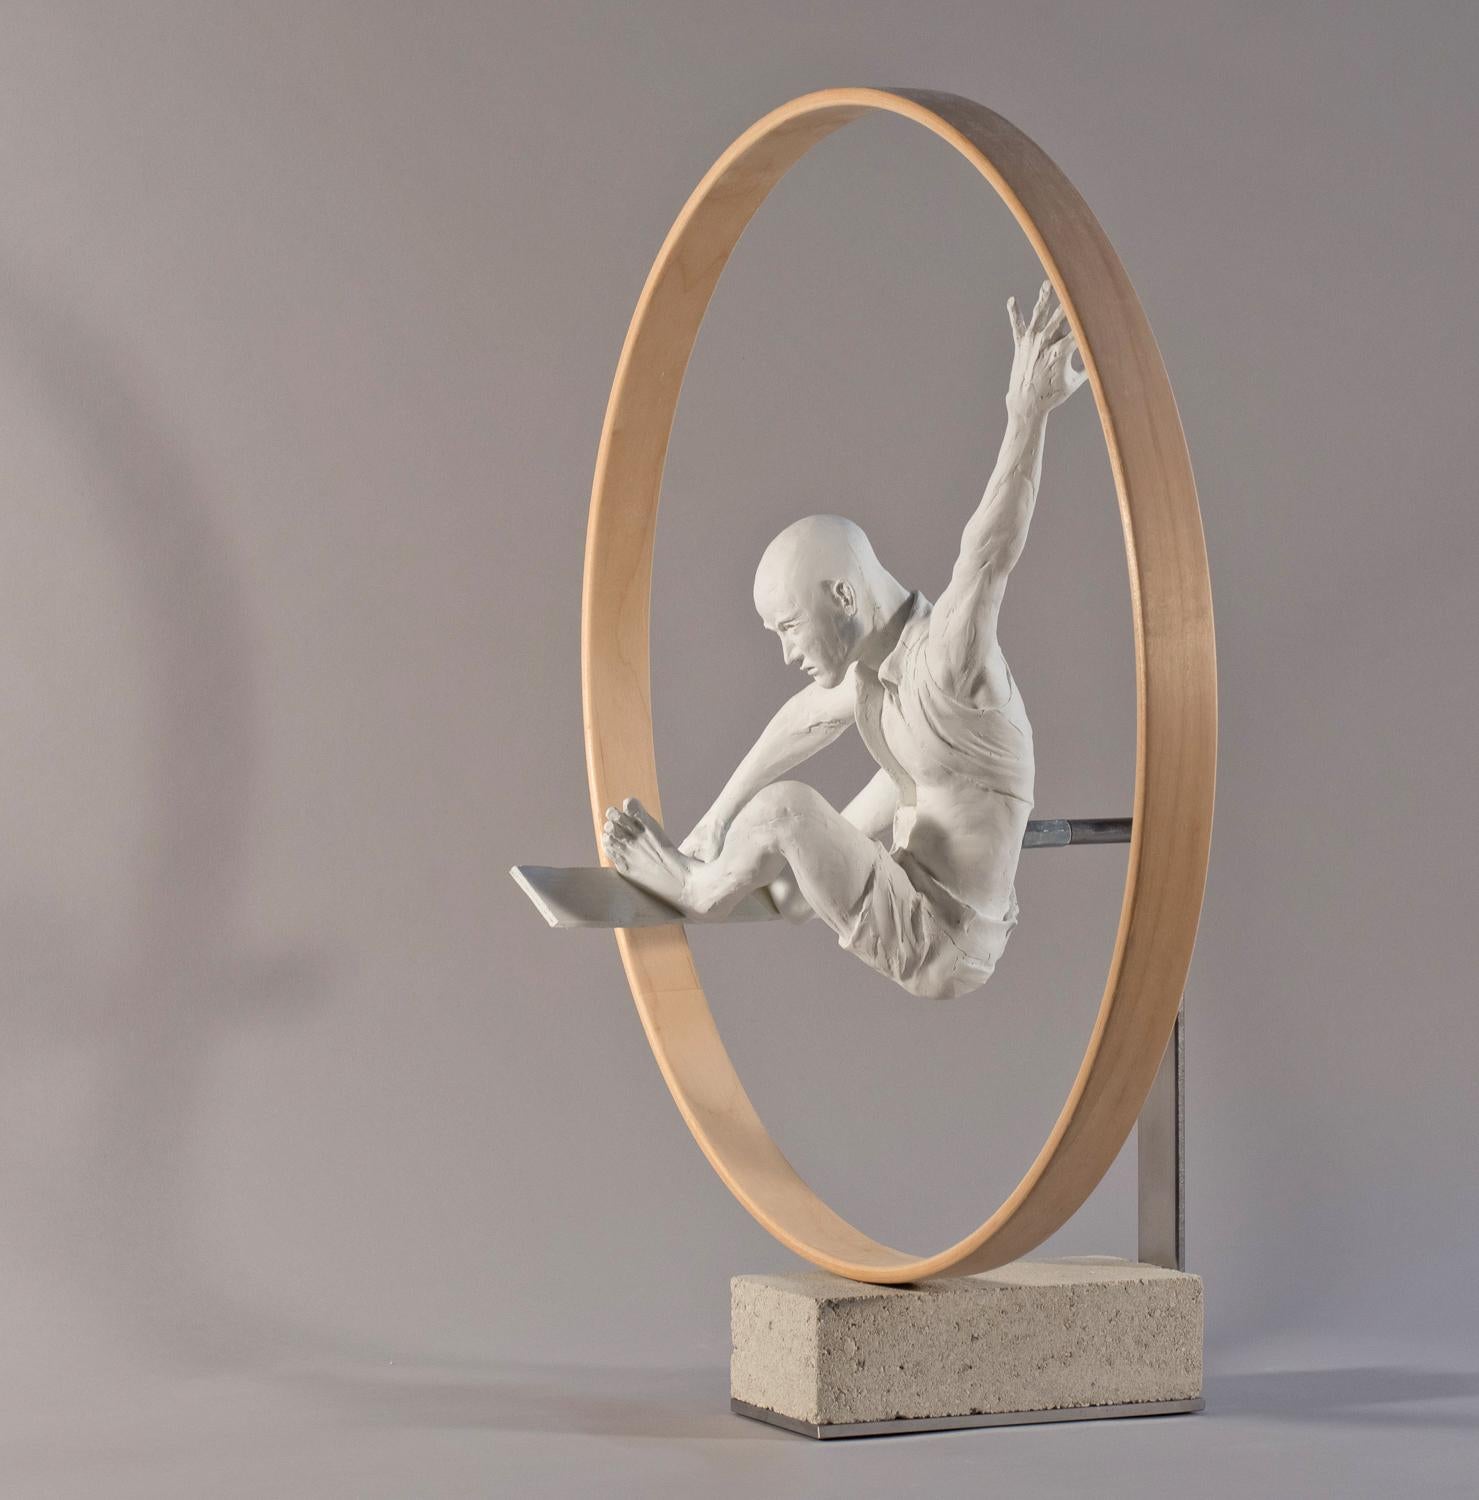 W.W. Hung Figurative Sculpture - Indy Grab - athletic male figurative sculpture performing a skateboard trick